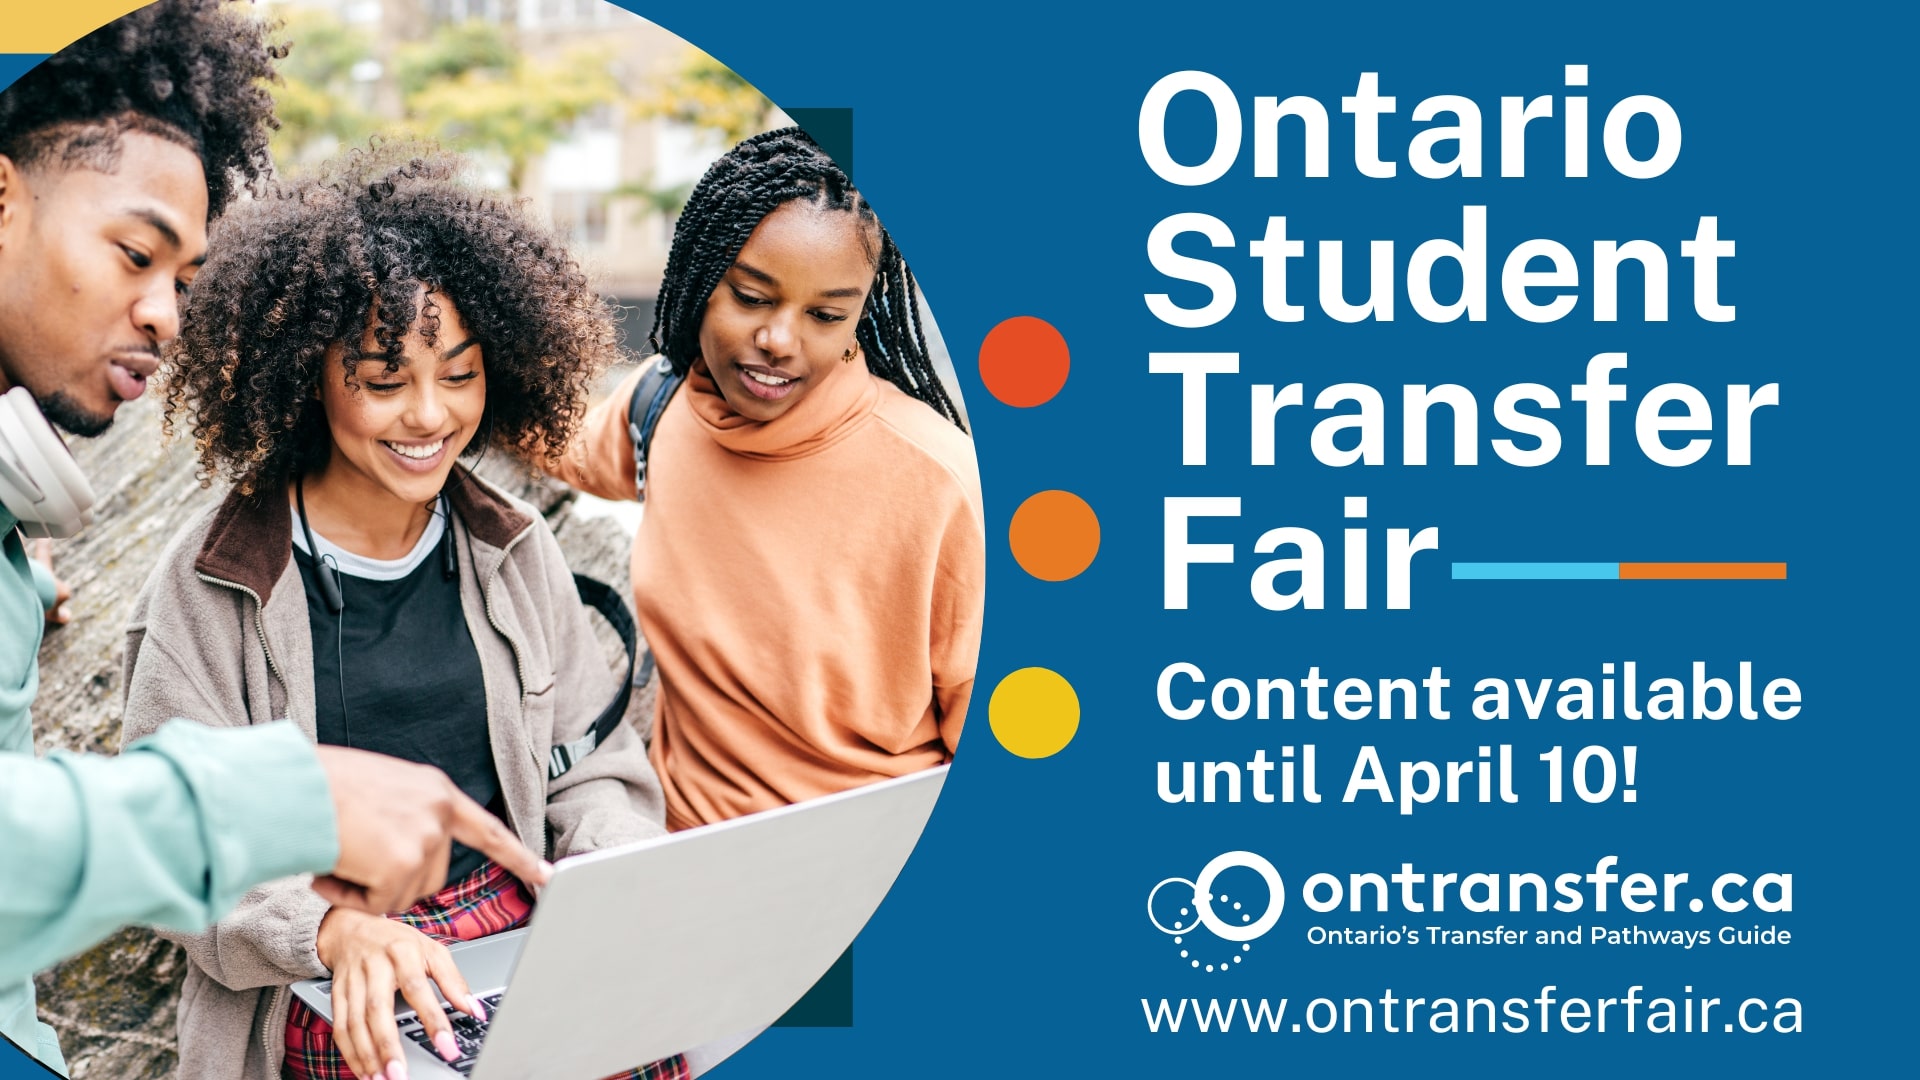 Ontario Student Transfer Fair (March 6-10)